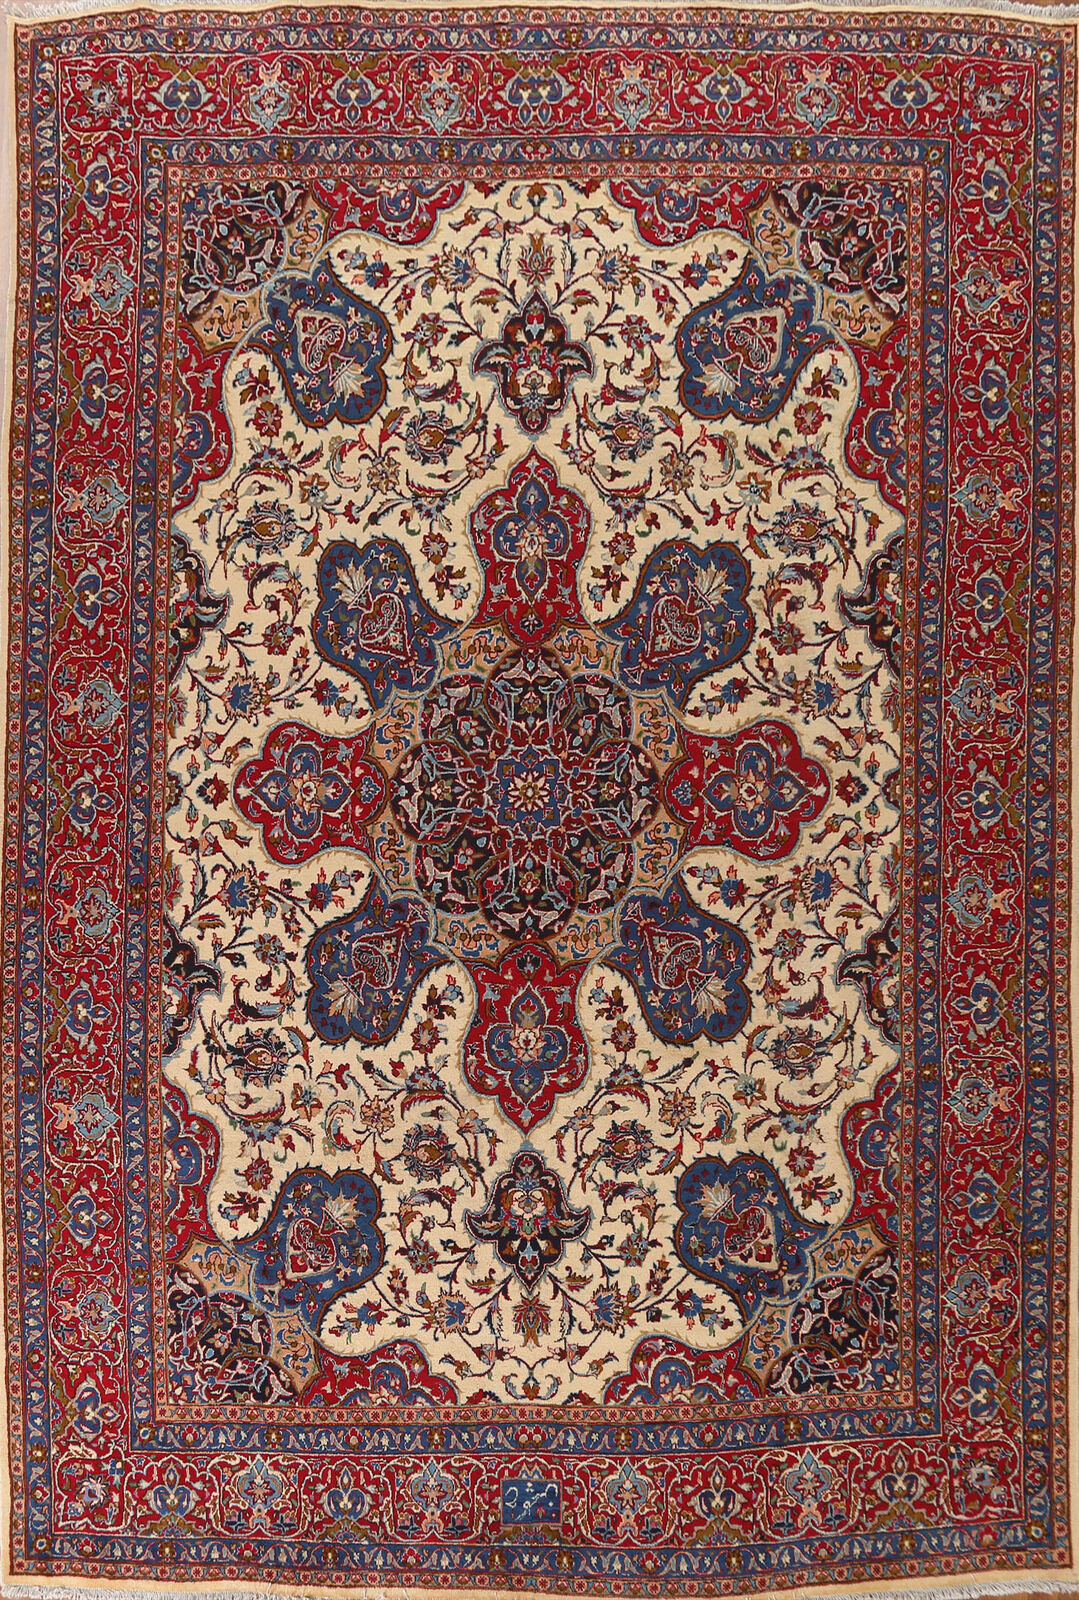 Vintage Floral Kashmar Ivory Wool Hand-knotted Dining Room Area Rug 10x12 Carpet